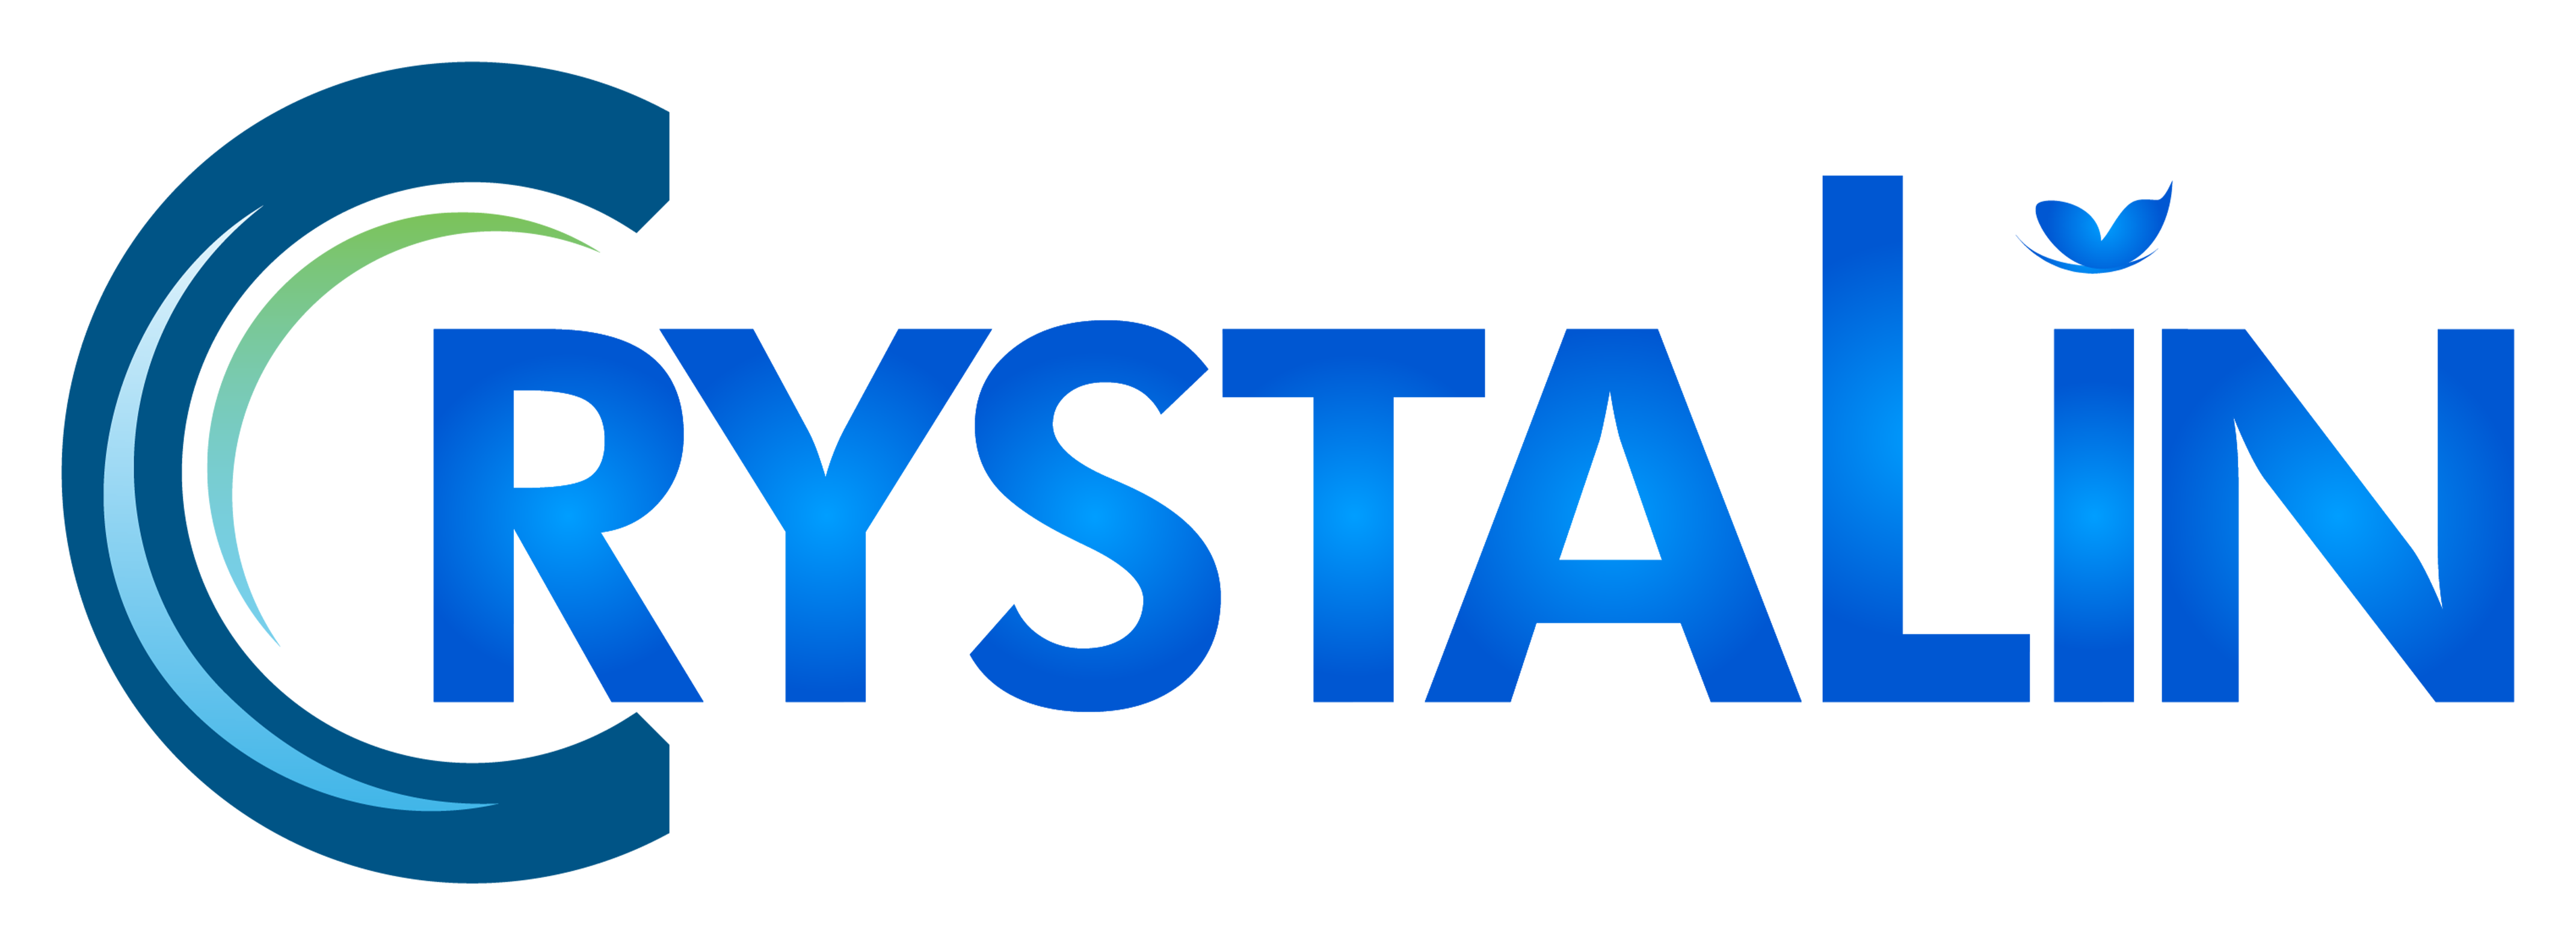 crystaline logo